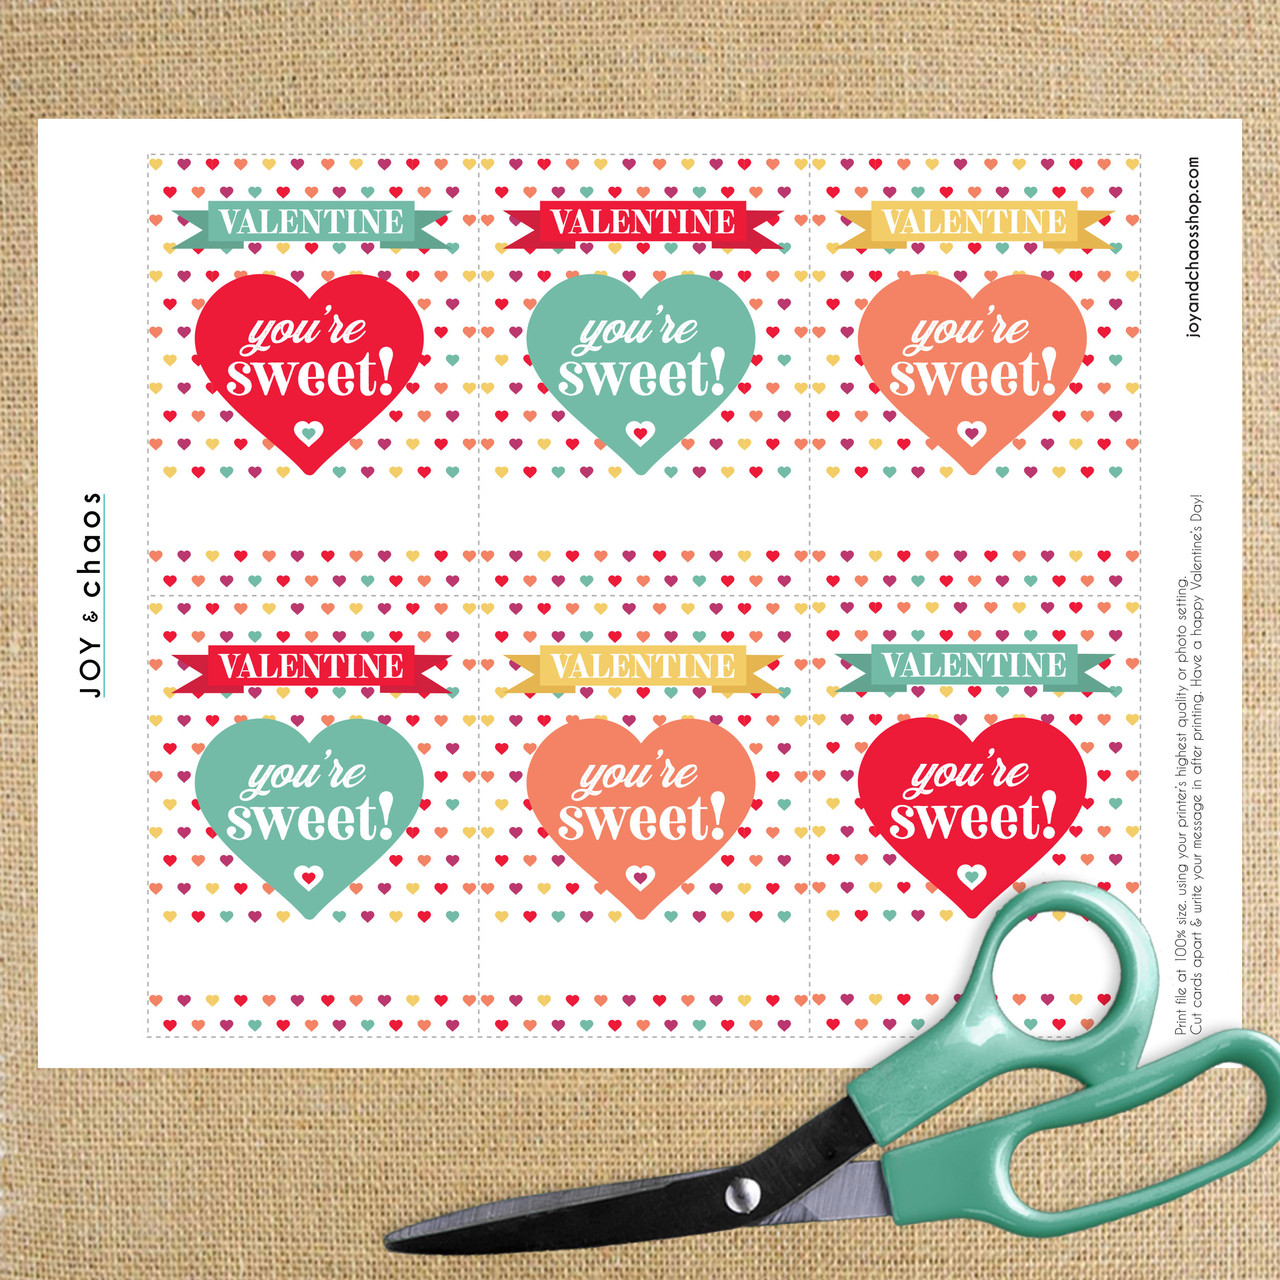 Kids Free Printable Valentine Cards - Print & Take to School